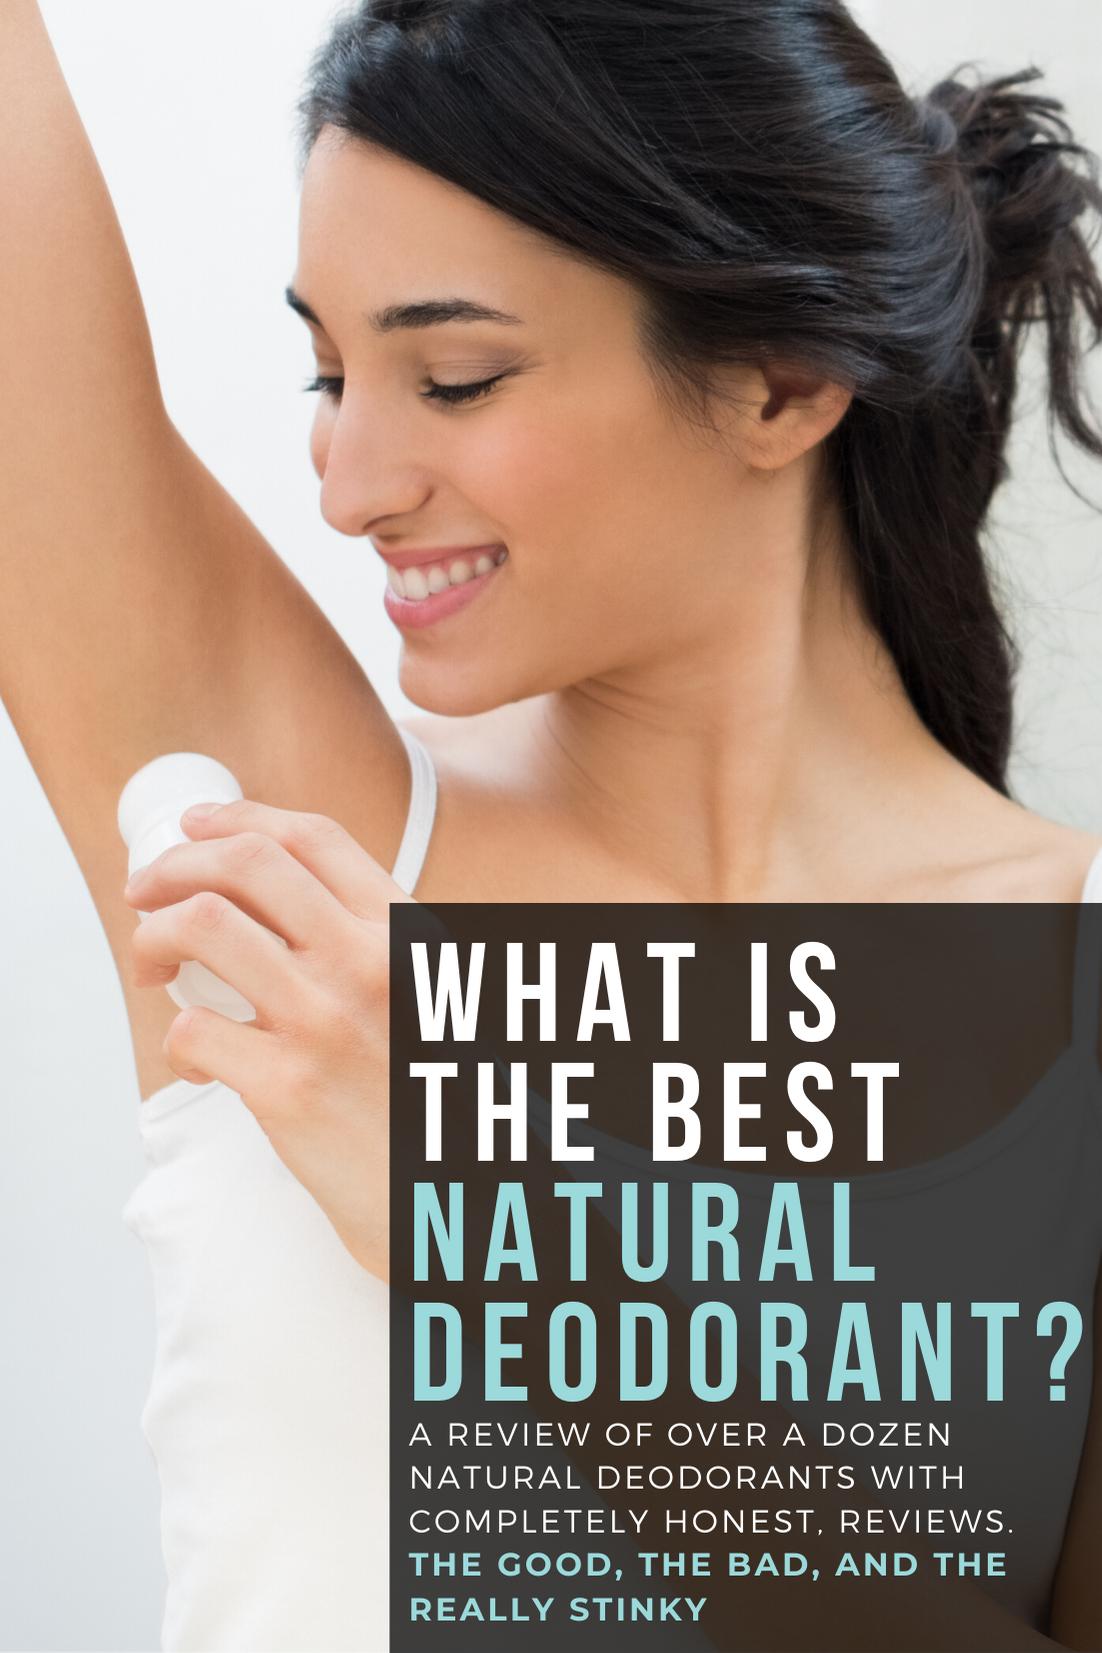 lume deodorant ingredients